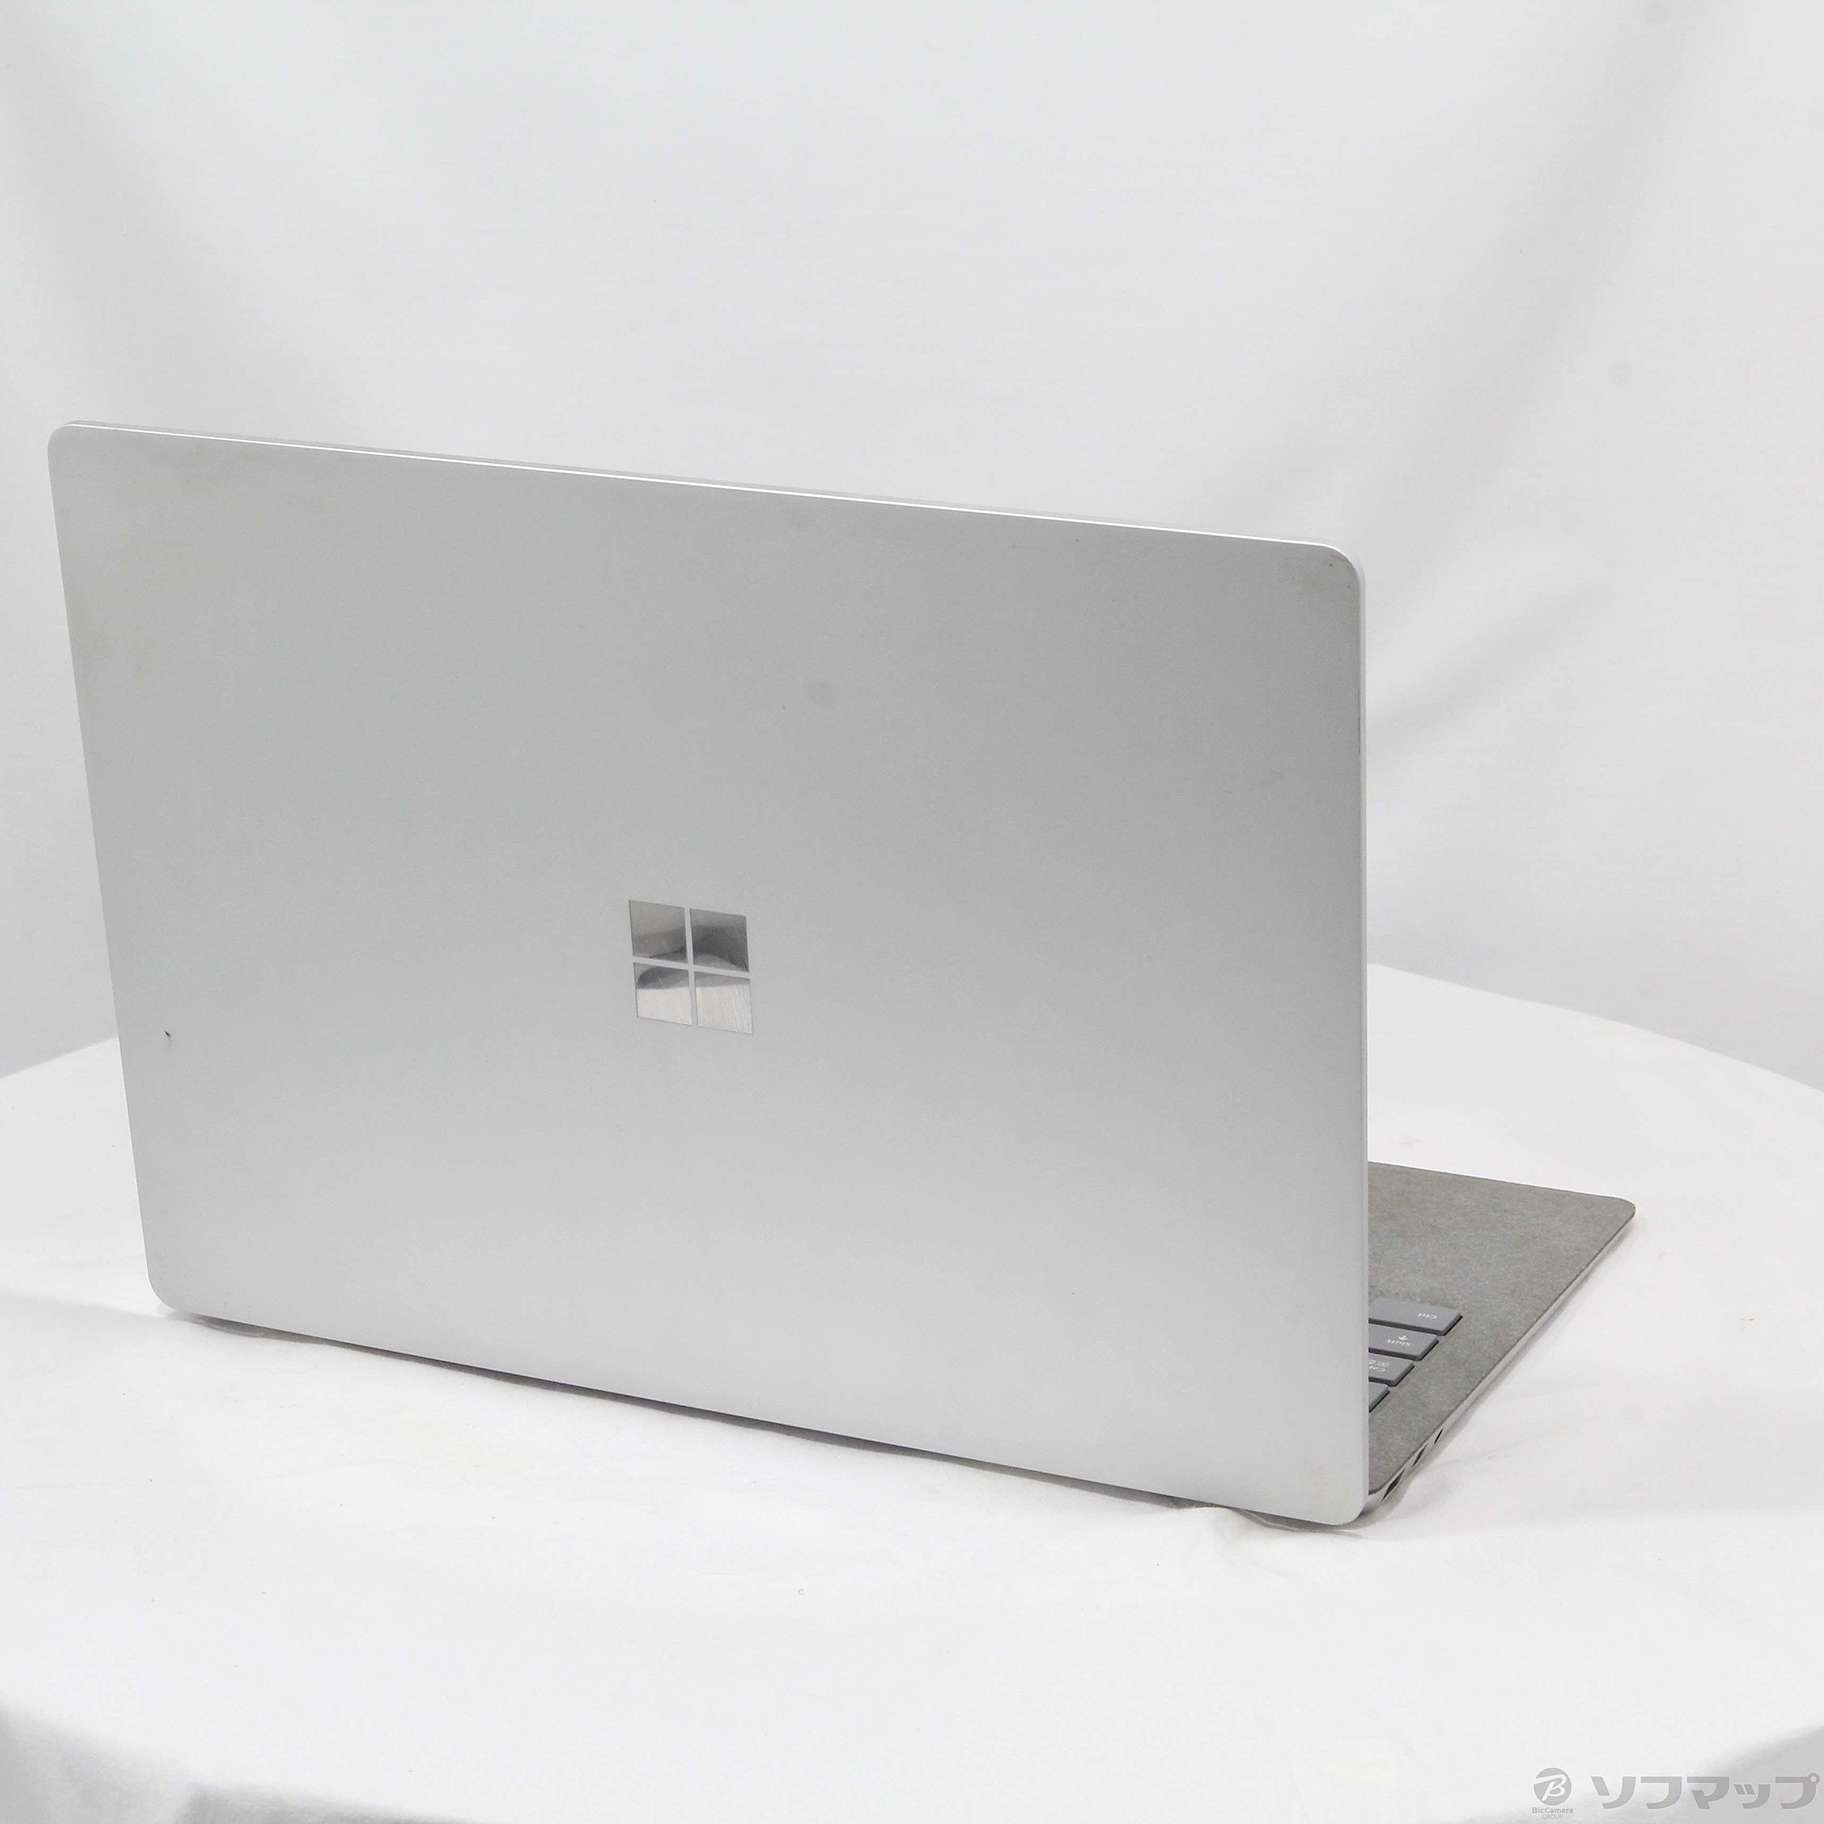 中古】Surface Laptop 2 〔Core i5／8GB／SSD256GB〕 LQN-00019 ...